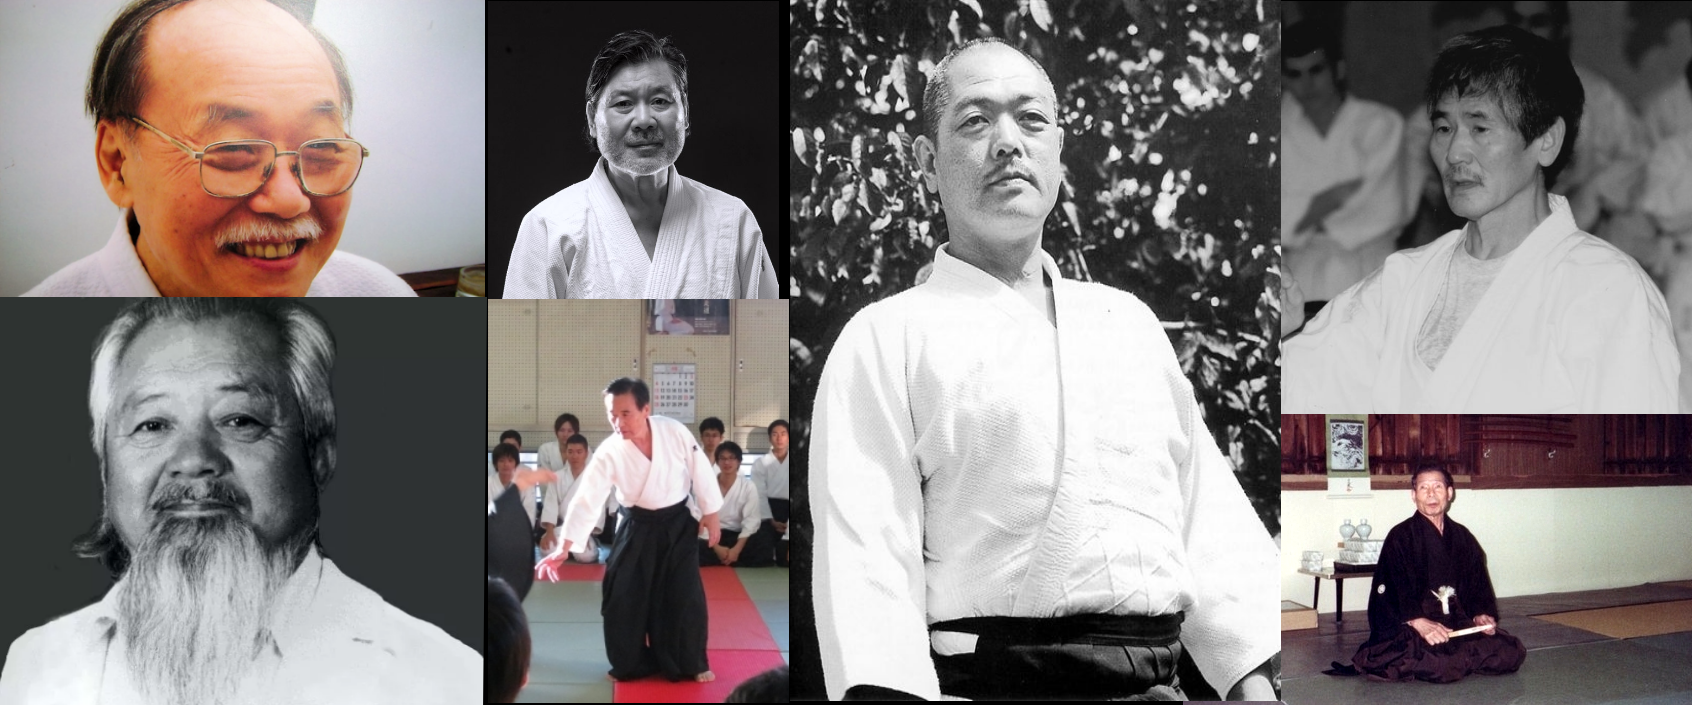 Background and Basics Takemusu Aikido Volume 1